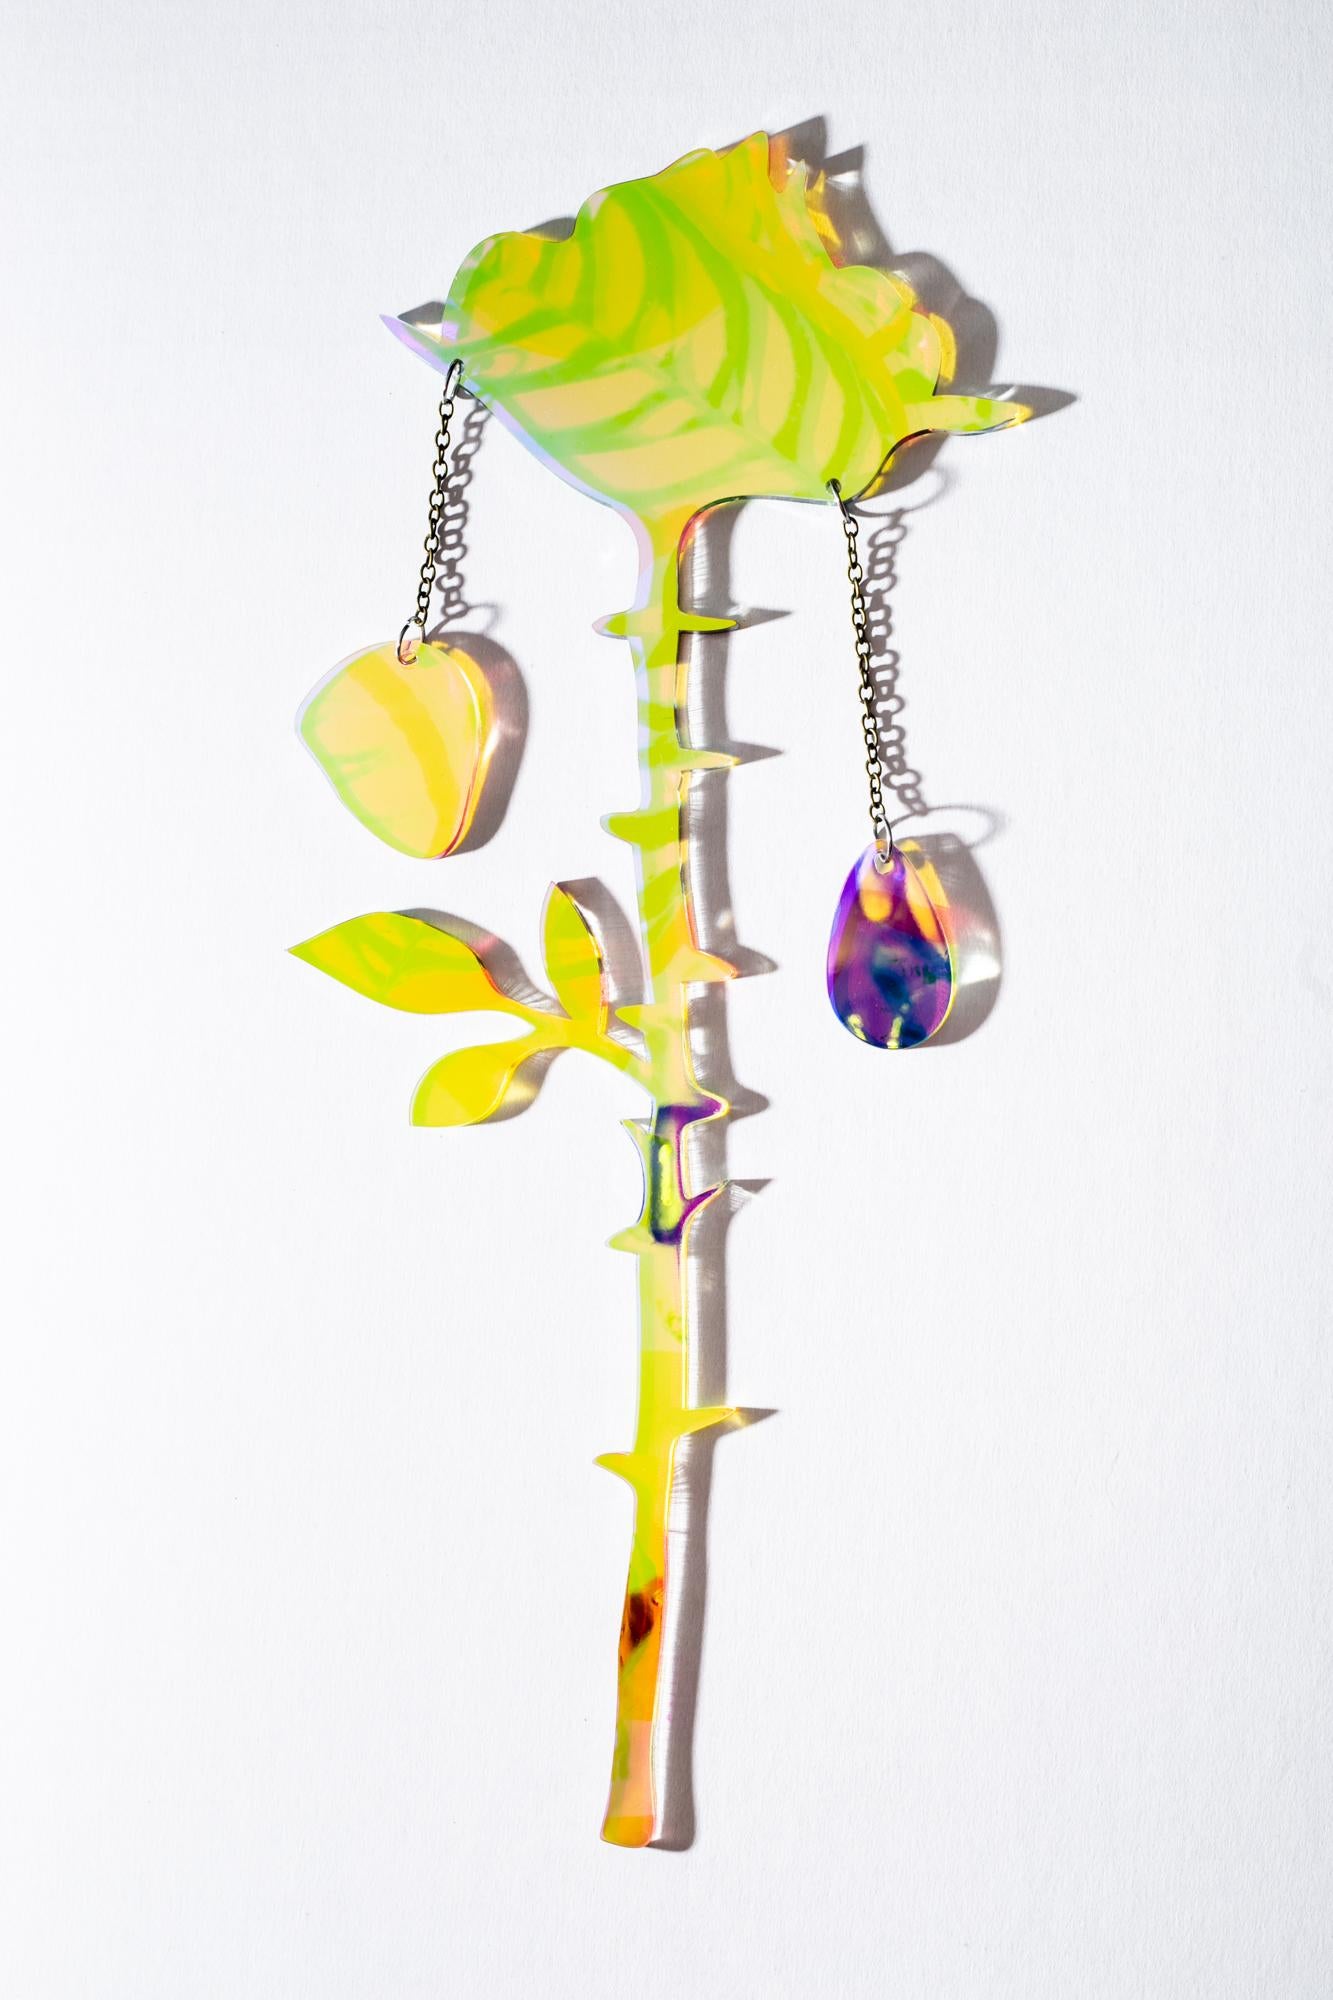 Petals Falling - Sculpture by Roxana Azar